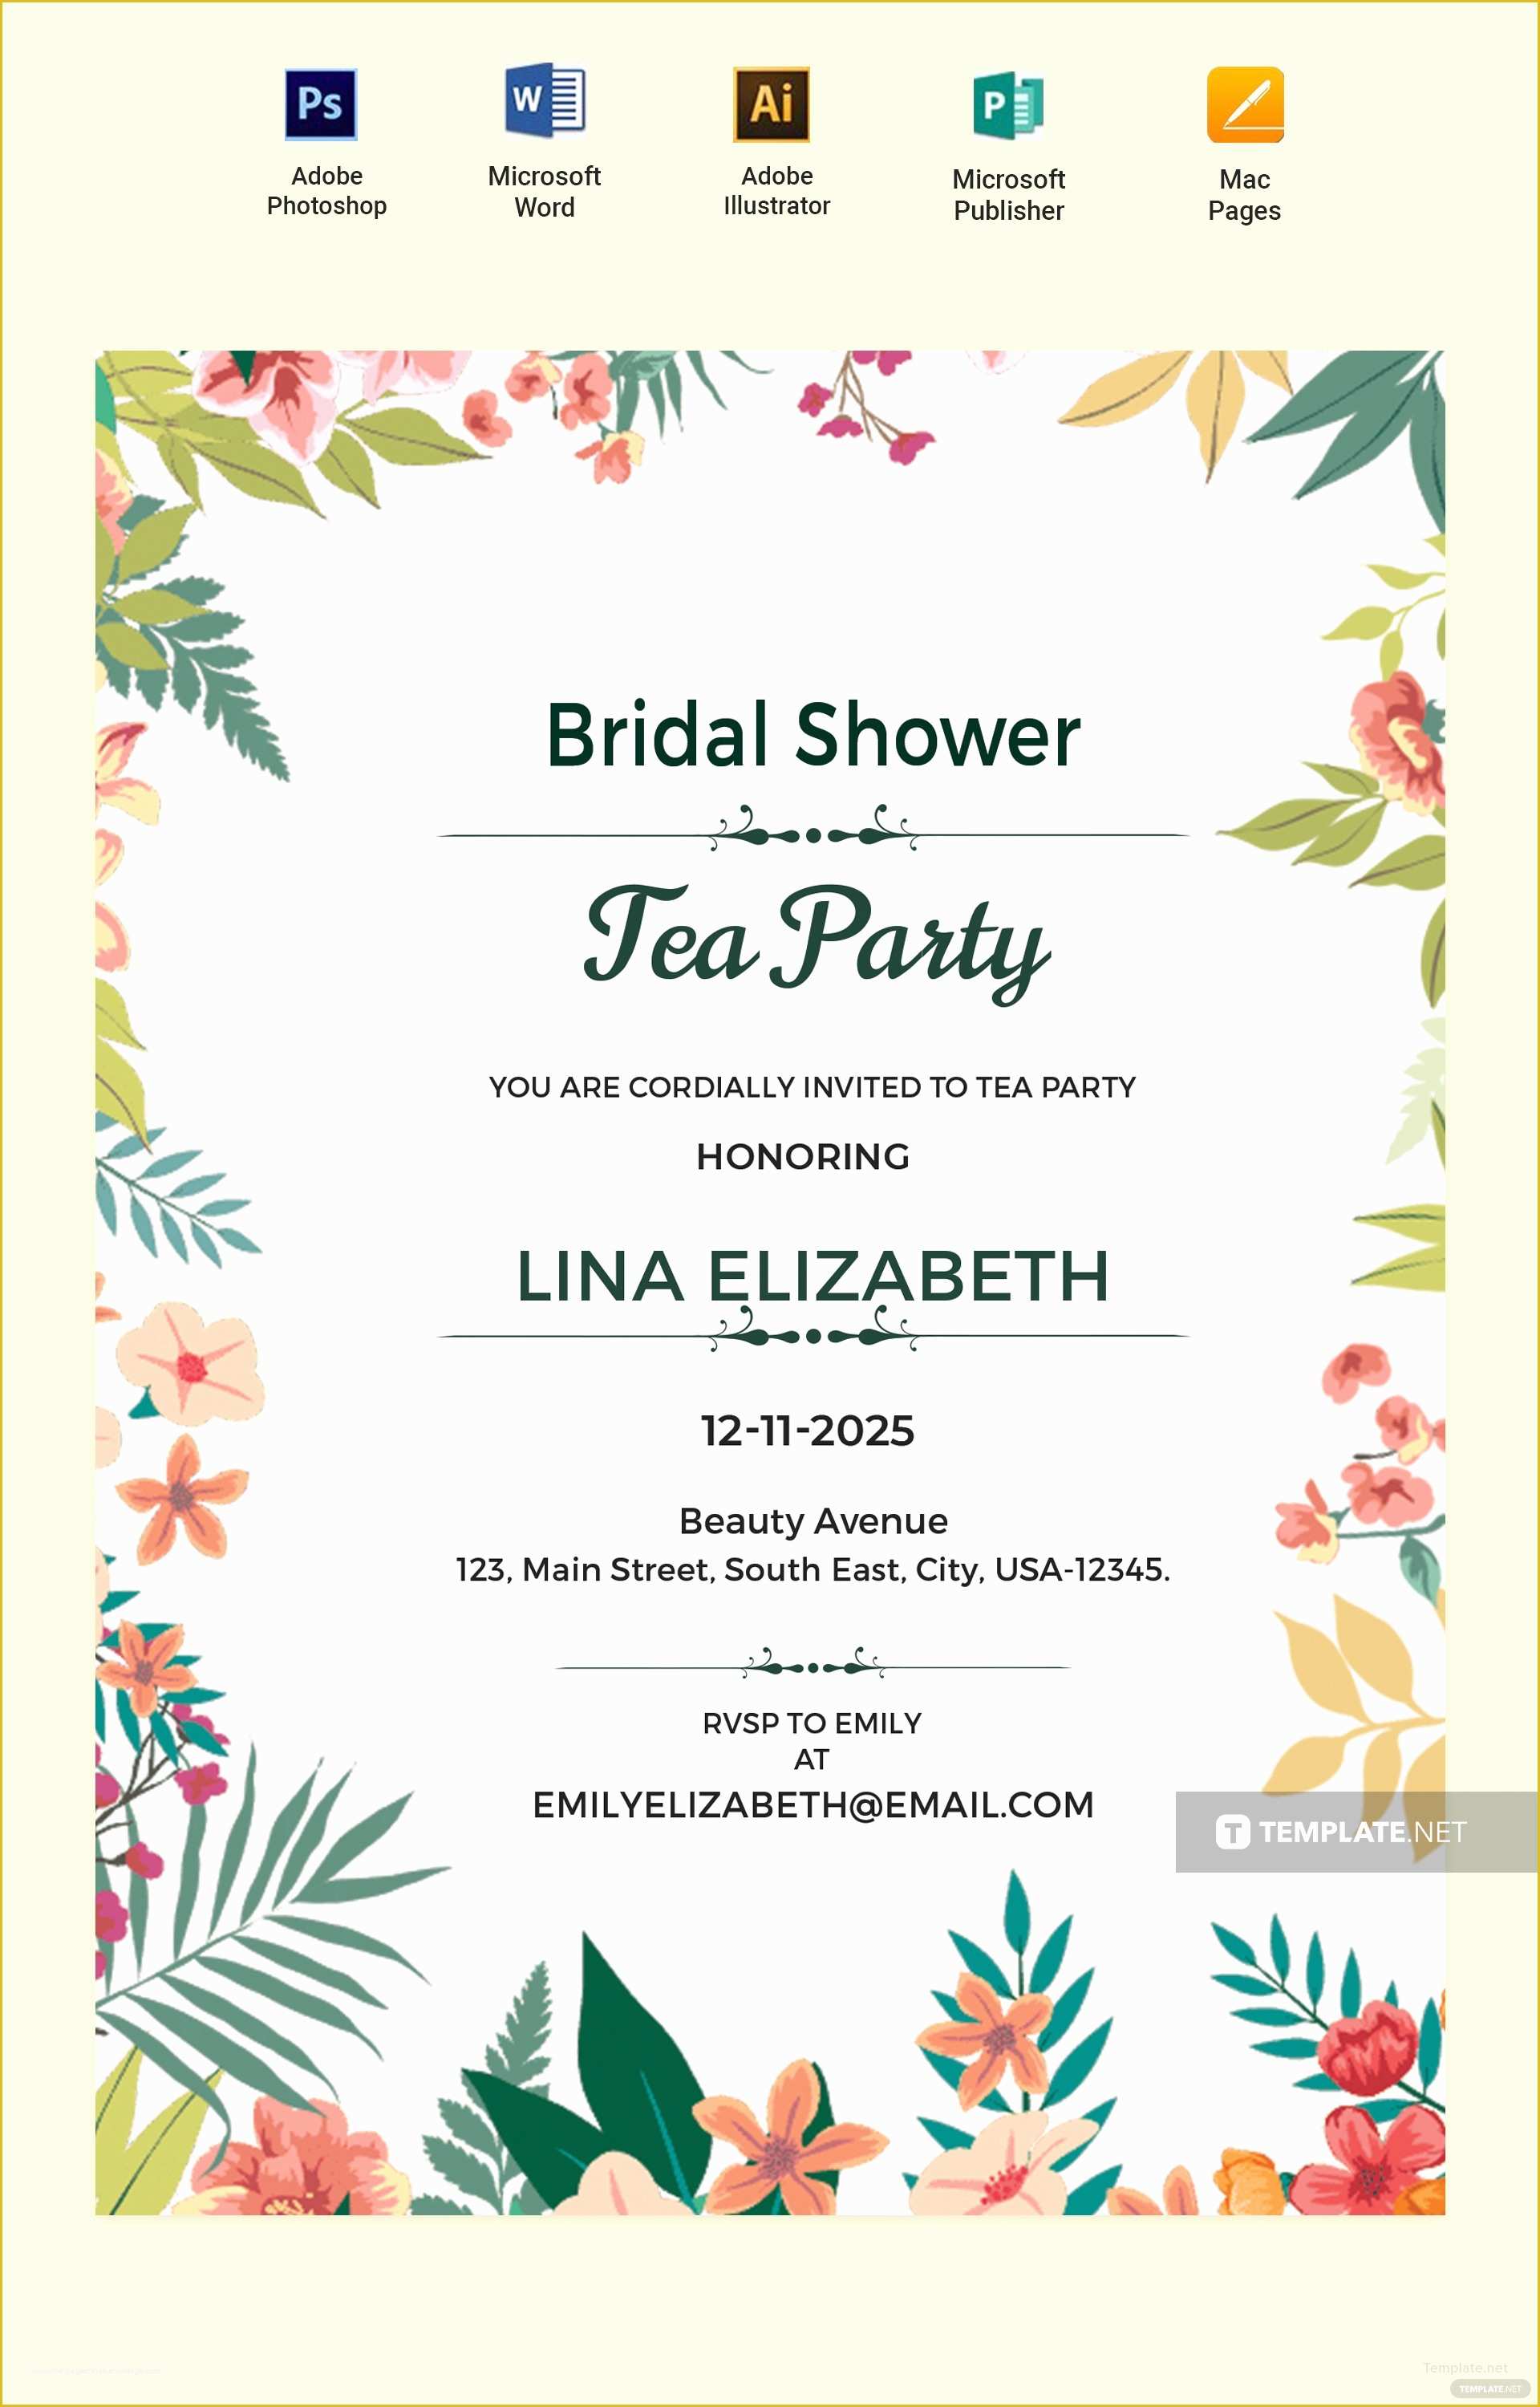 Free Bridal Shower Invitation Templates Photoshop Of Free Bridal Shower Tea Party Invitation Template In Adobe